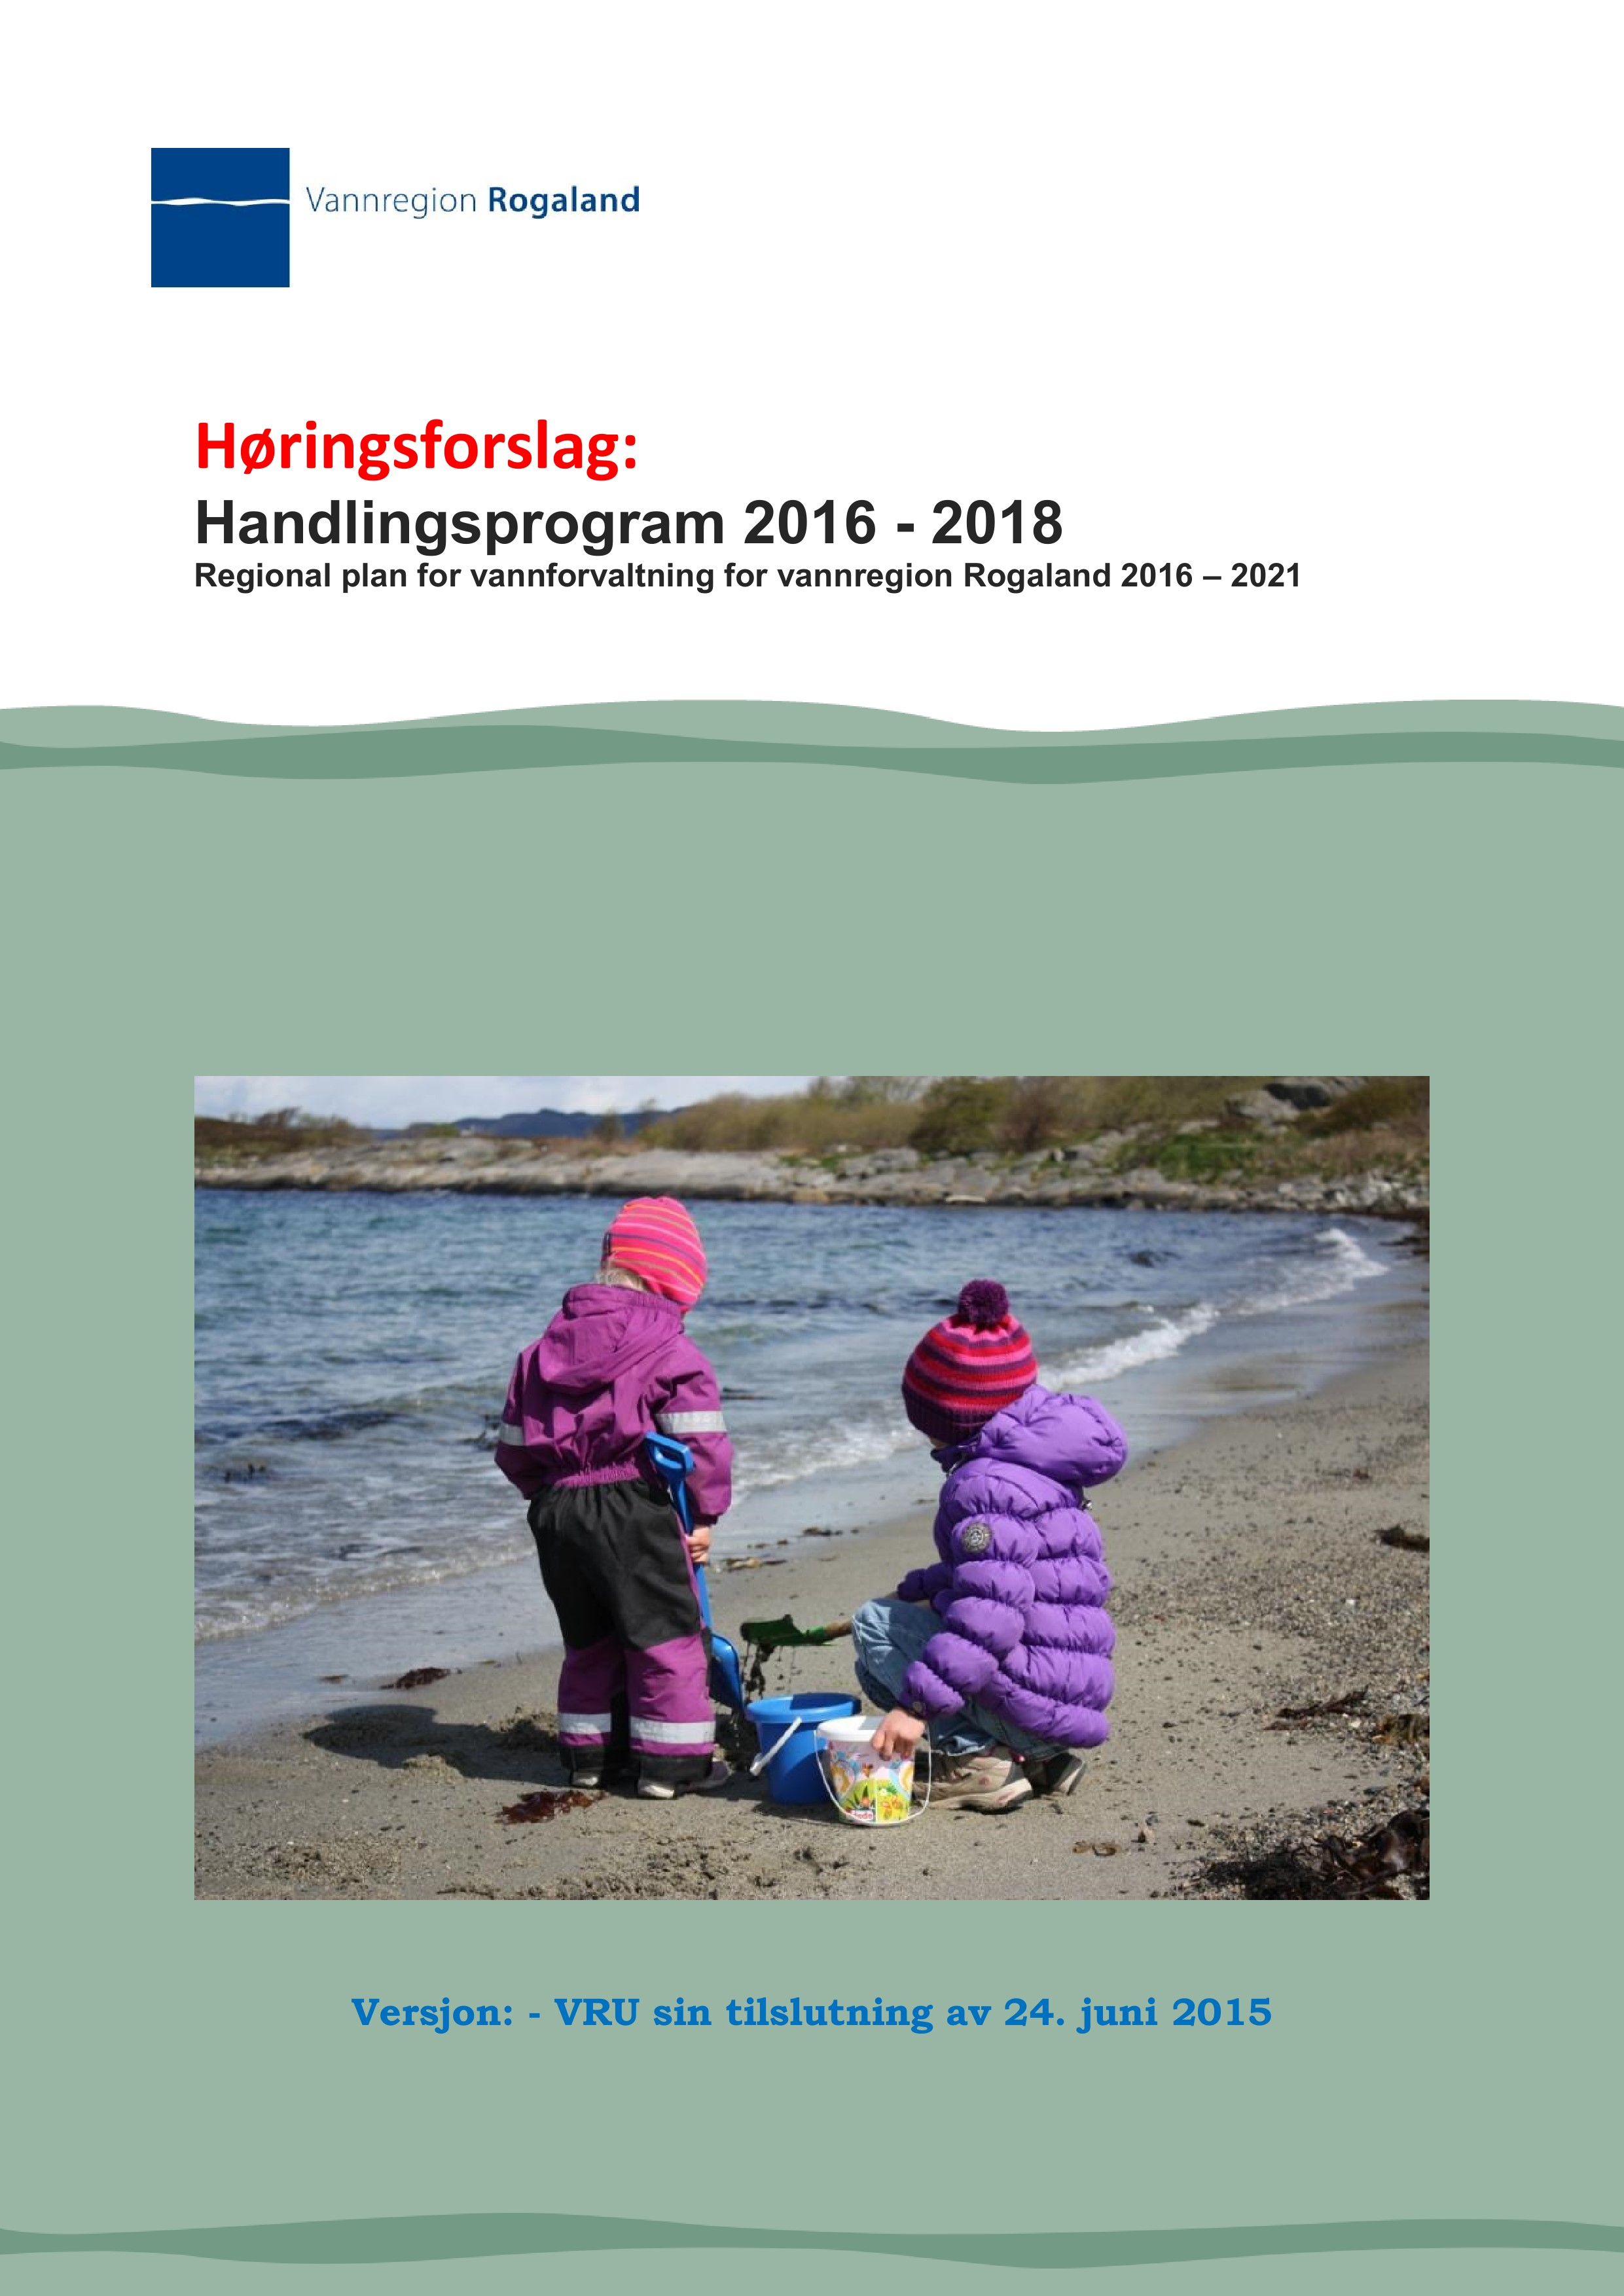 Høringsforslag: Handlingsprogram 2016-2018 Regional plan for vannforvaltning